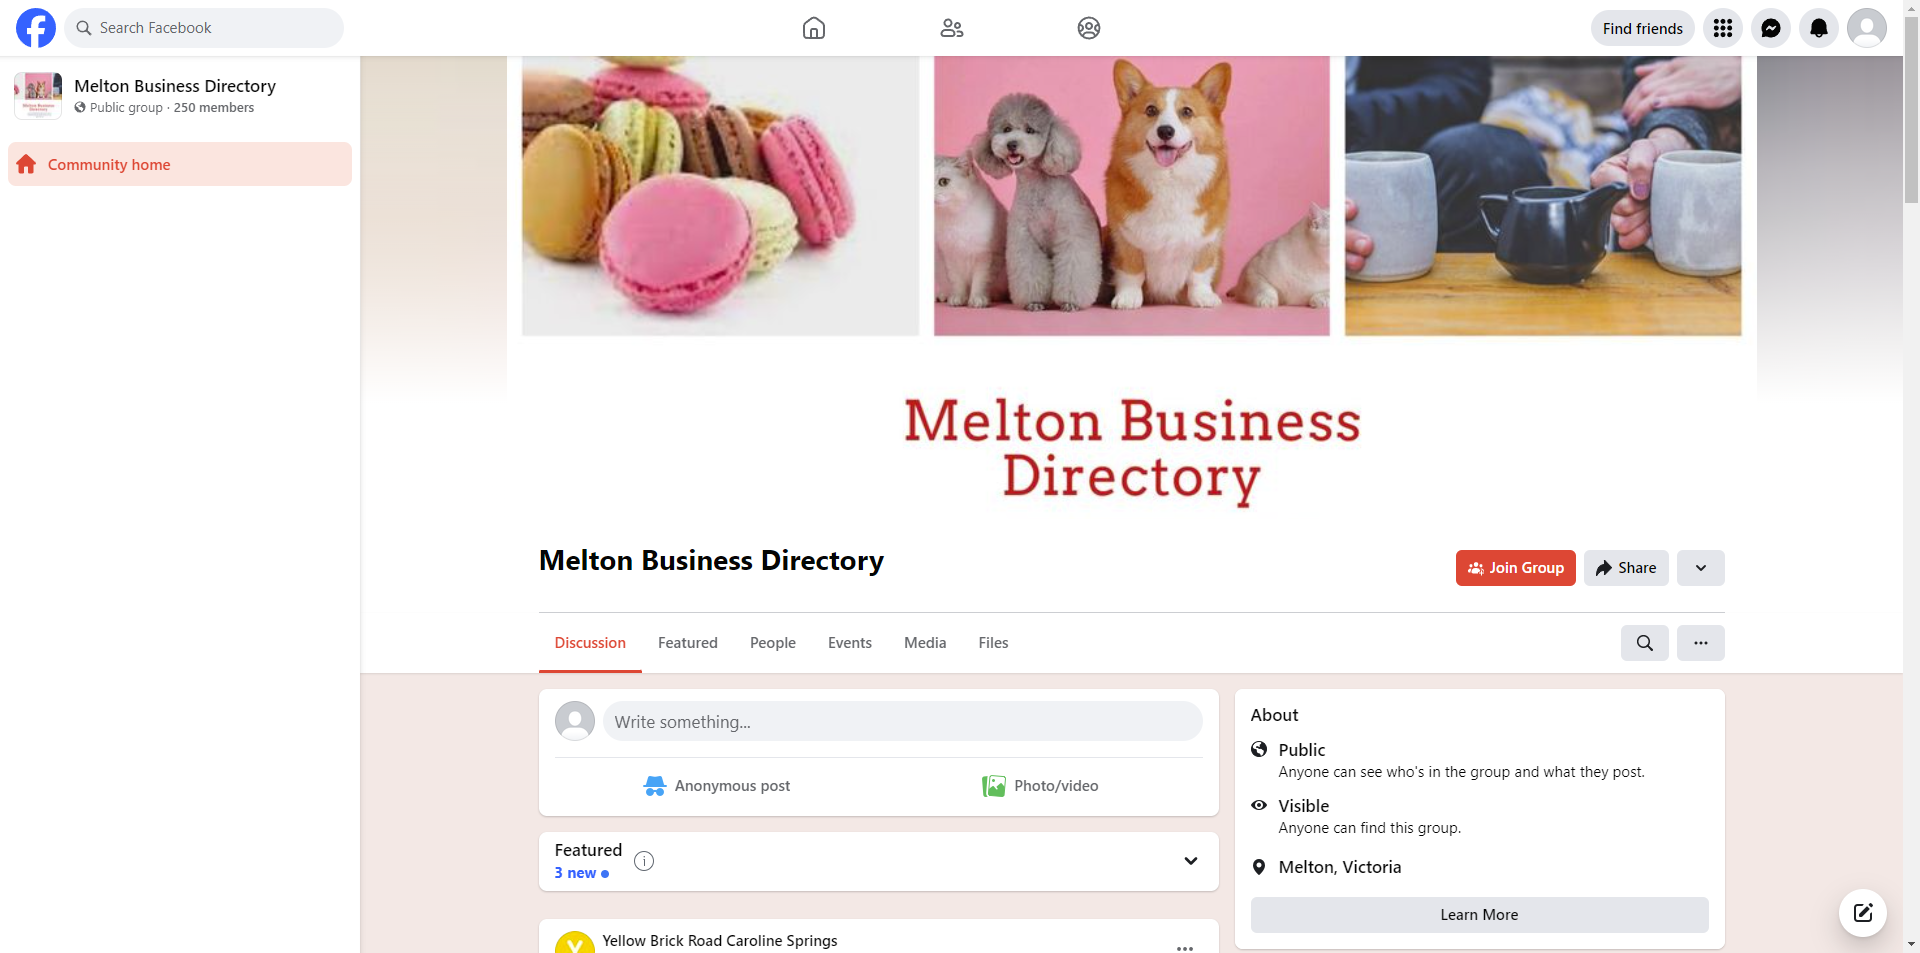 Melton Business Directory - Facebook